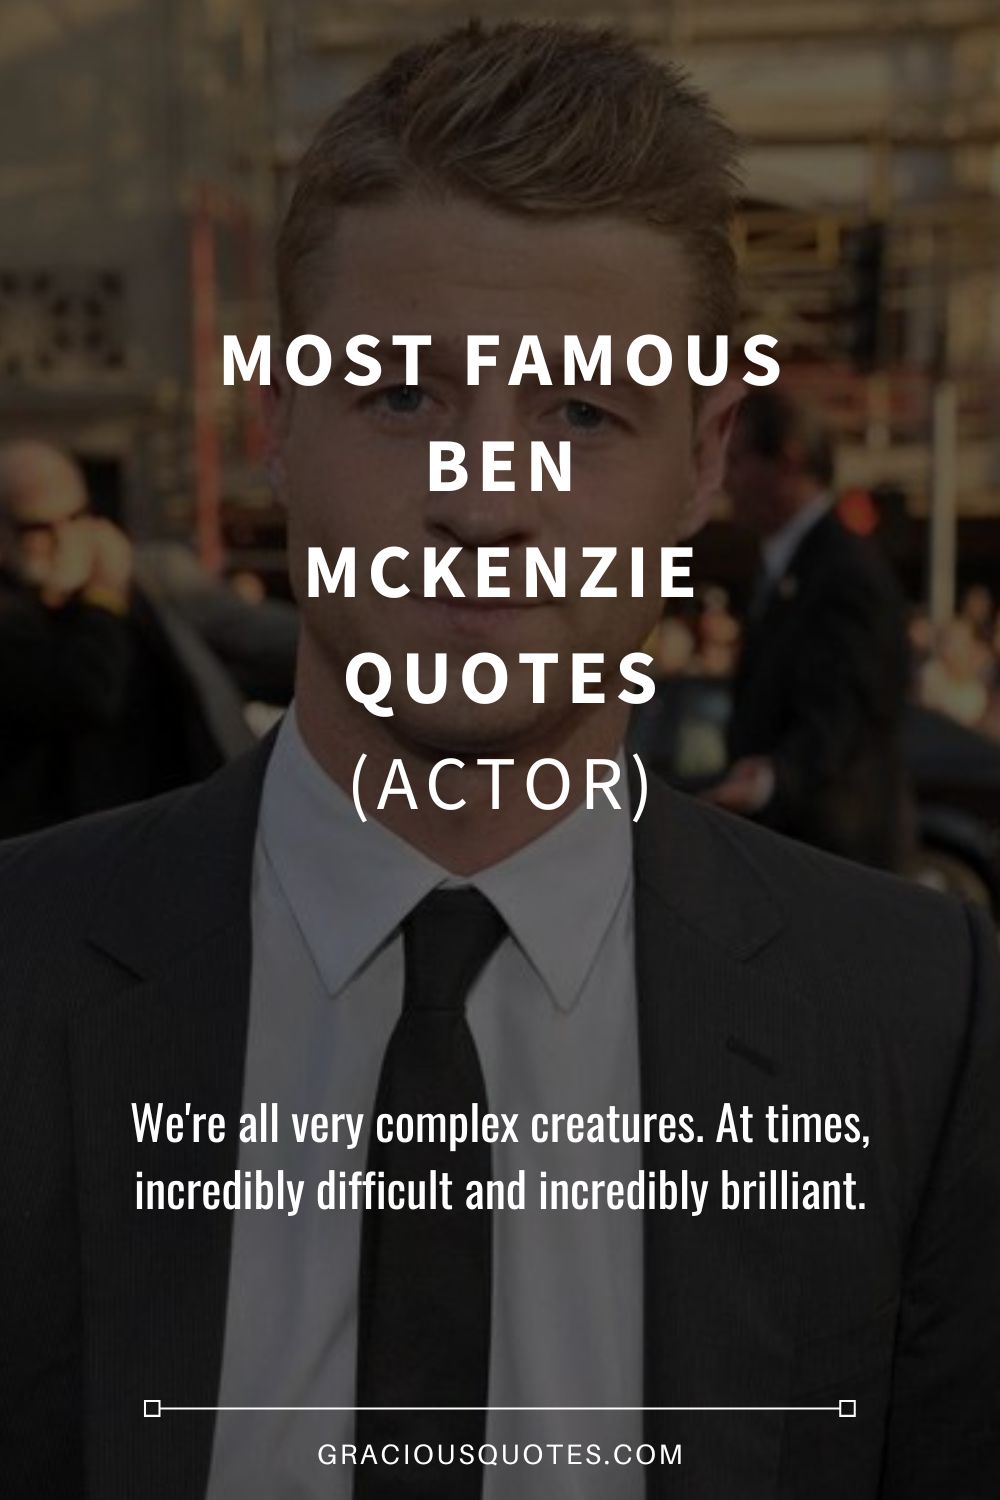 Most Famous Ben McKenzie Quotes (ACTOR) - Gracious Quotes